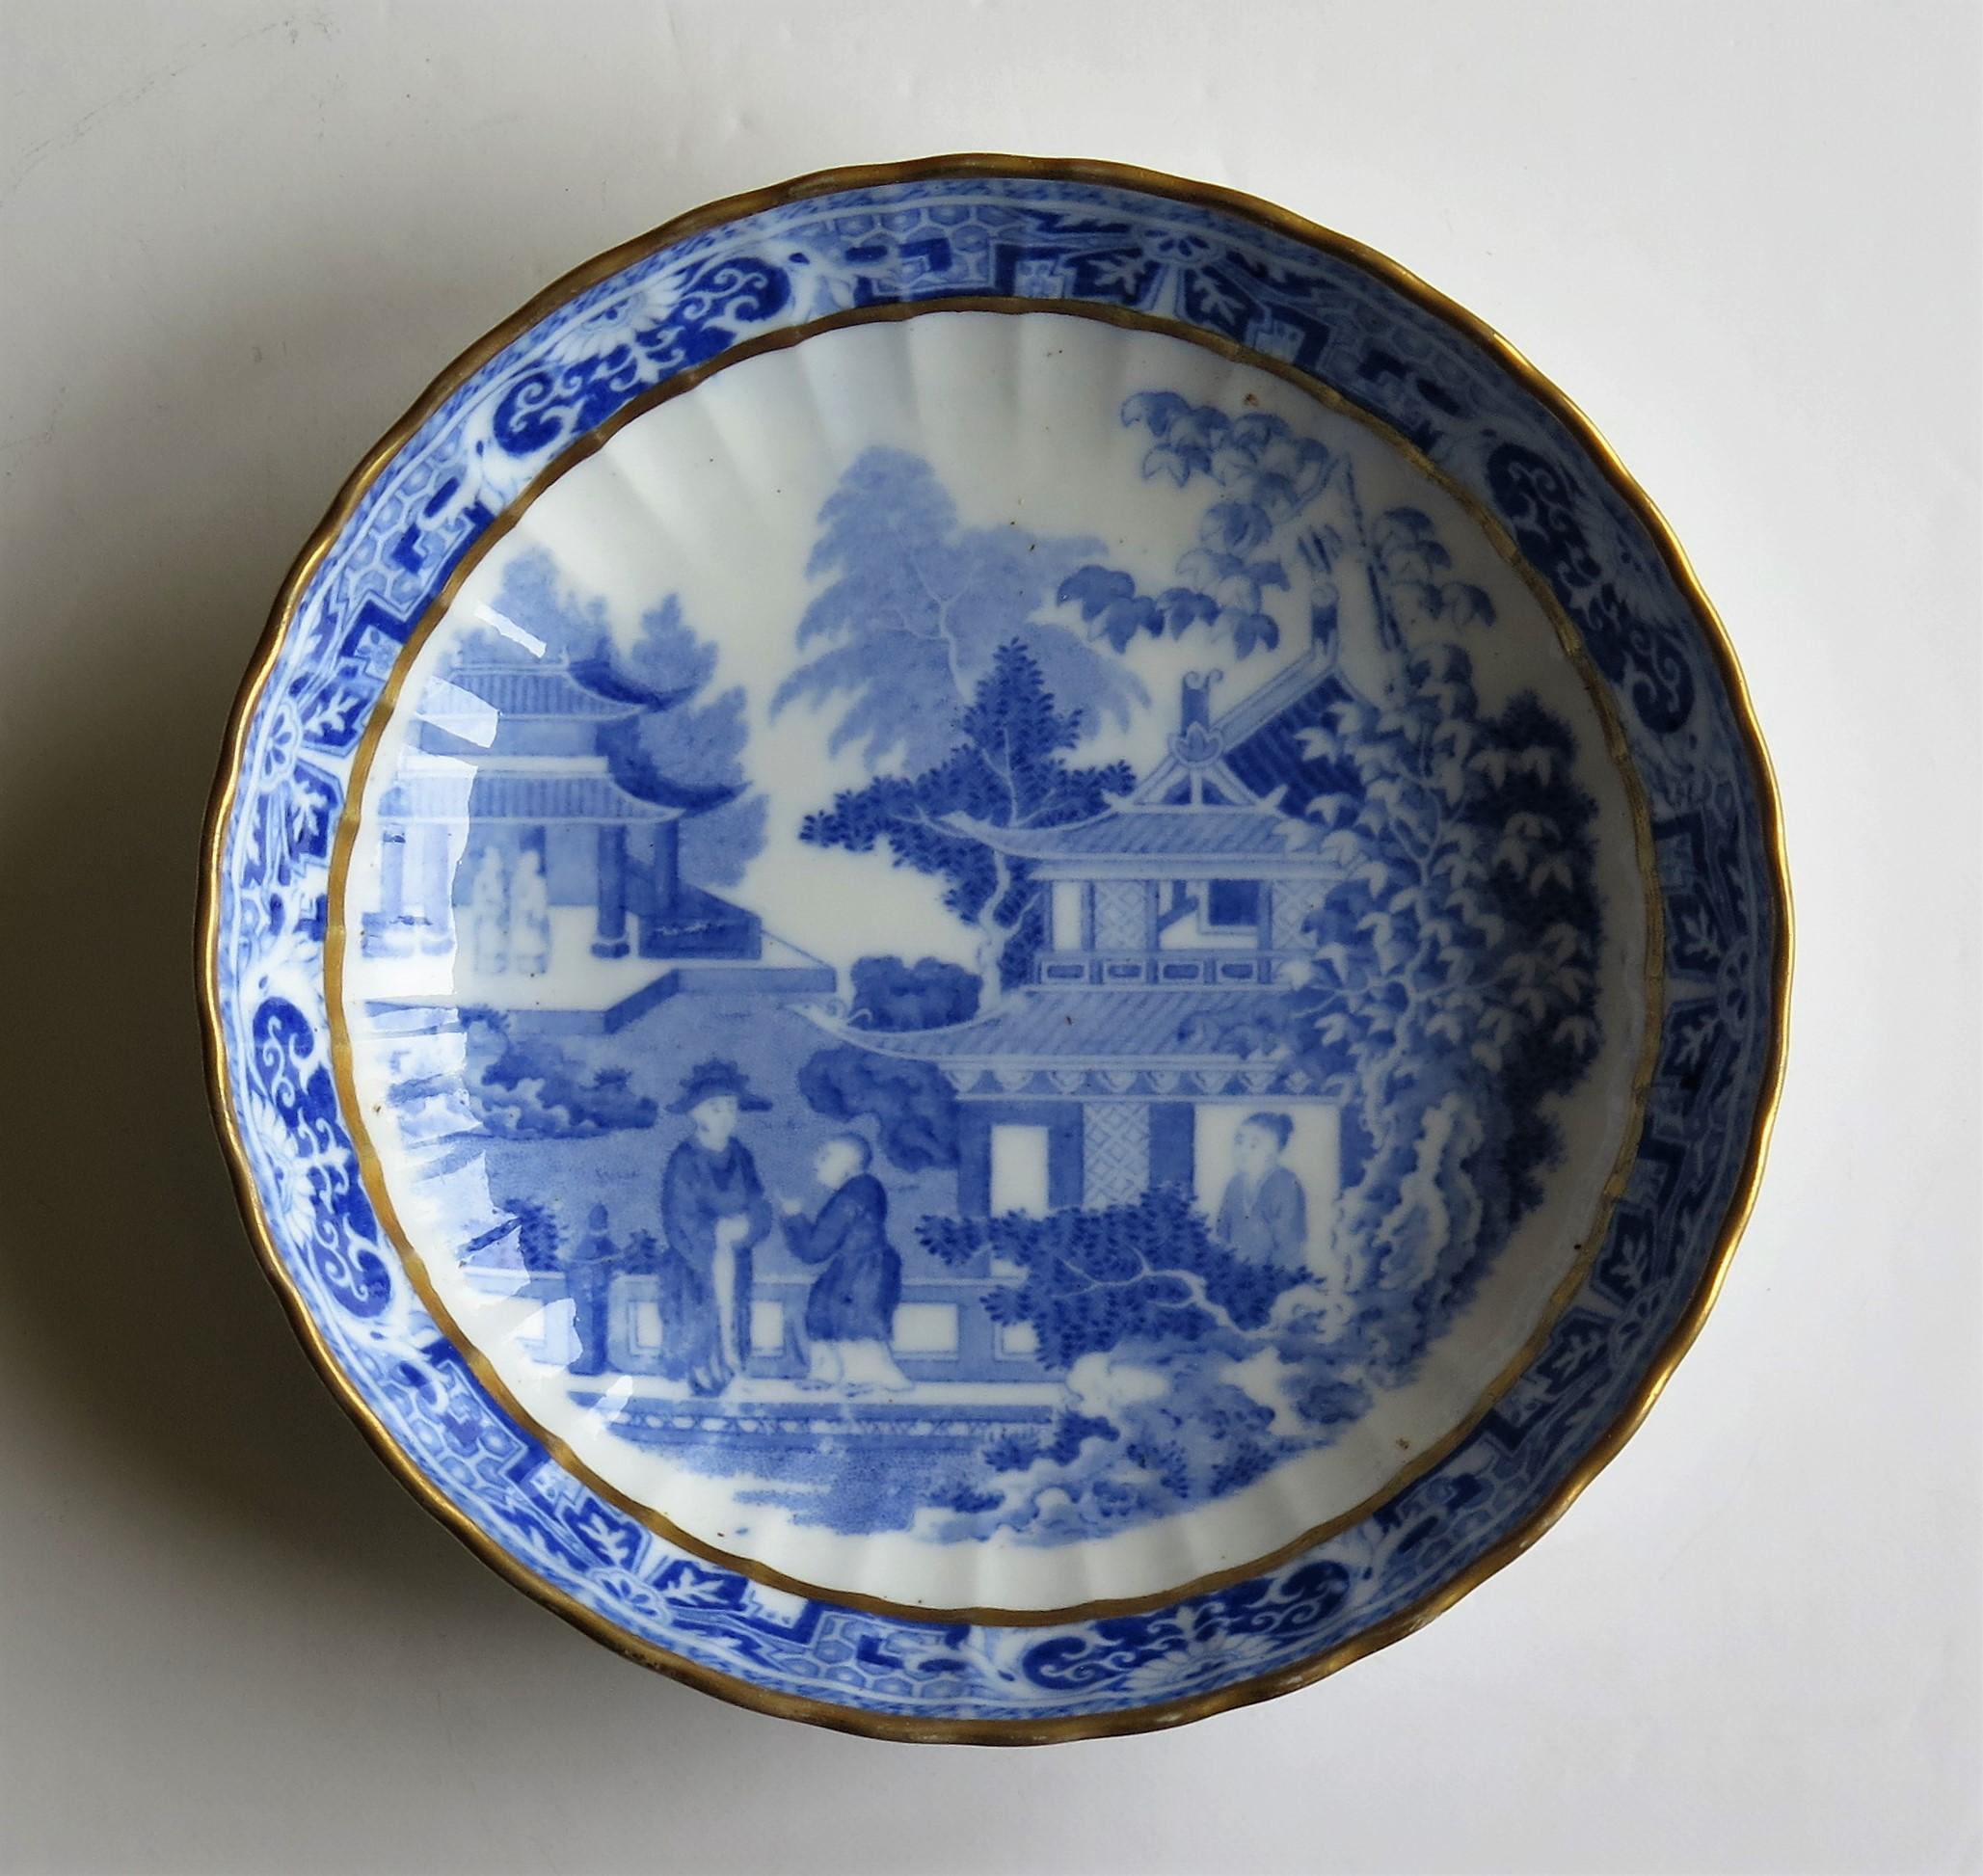 Miles Mason Saucer Dish Blue and White Porcelain Chinamen on Verandah Pattern 4